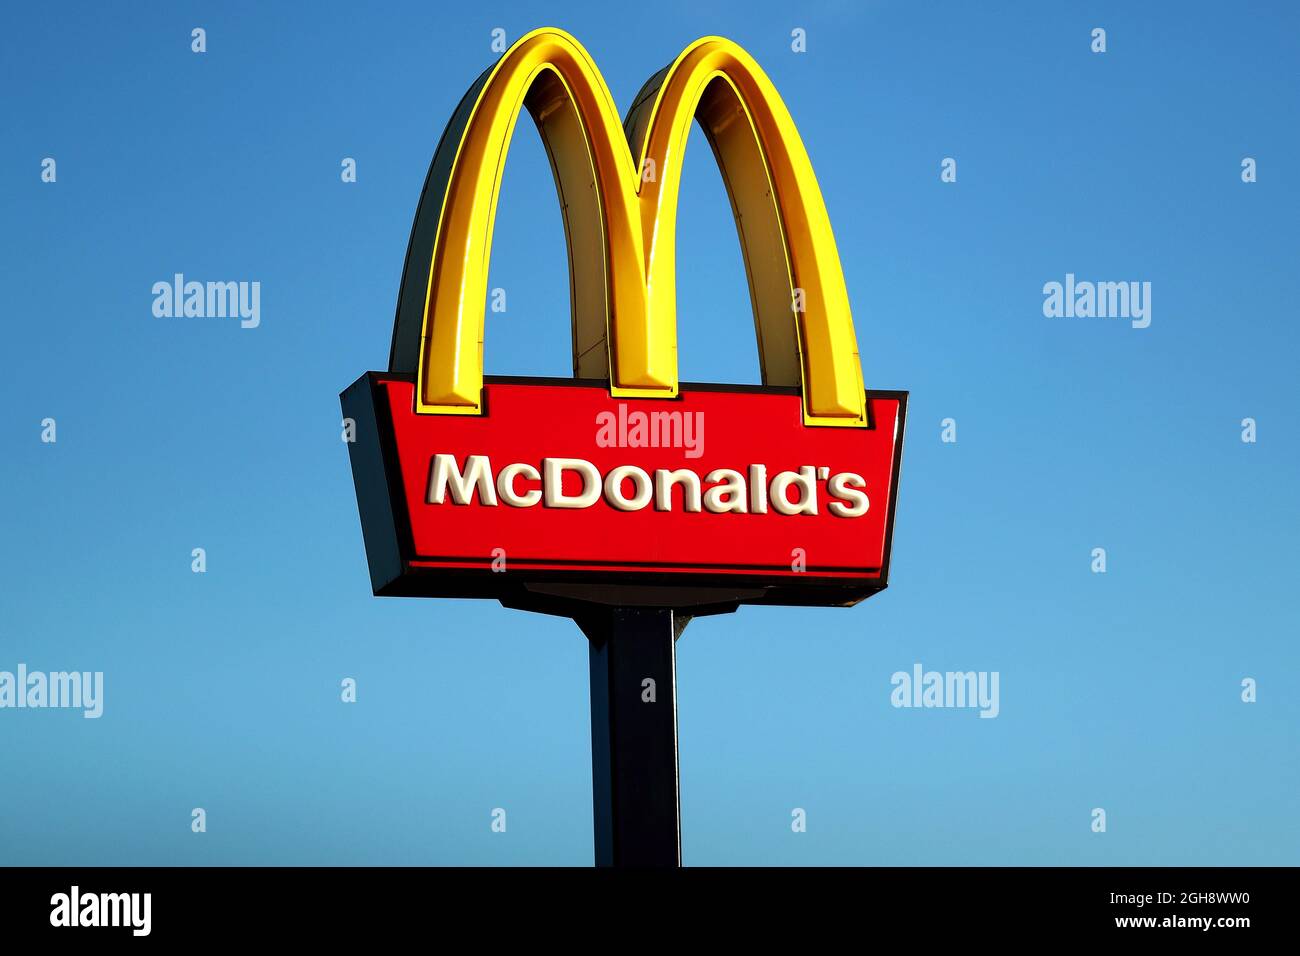 LOWESTOFT, ENGLAND - MARCH 23: McDonald's branding is seen serving ...